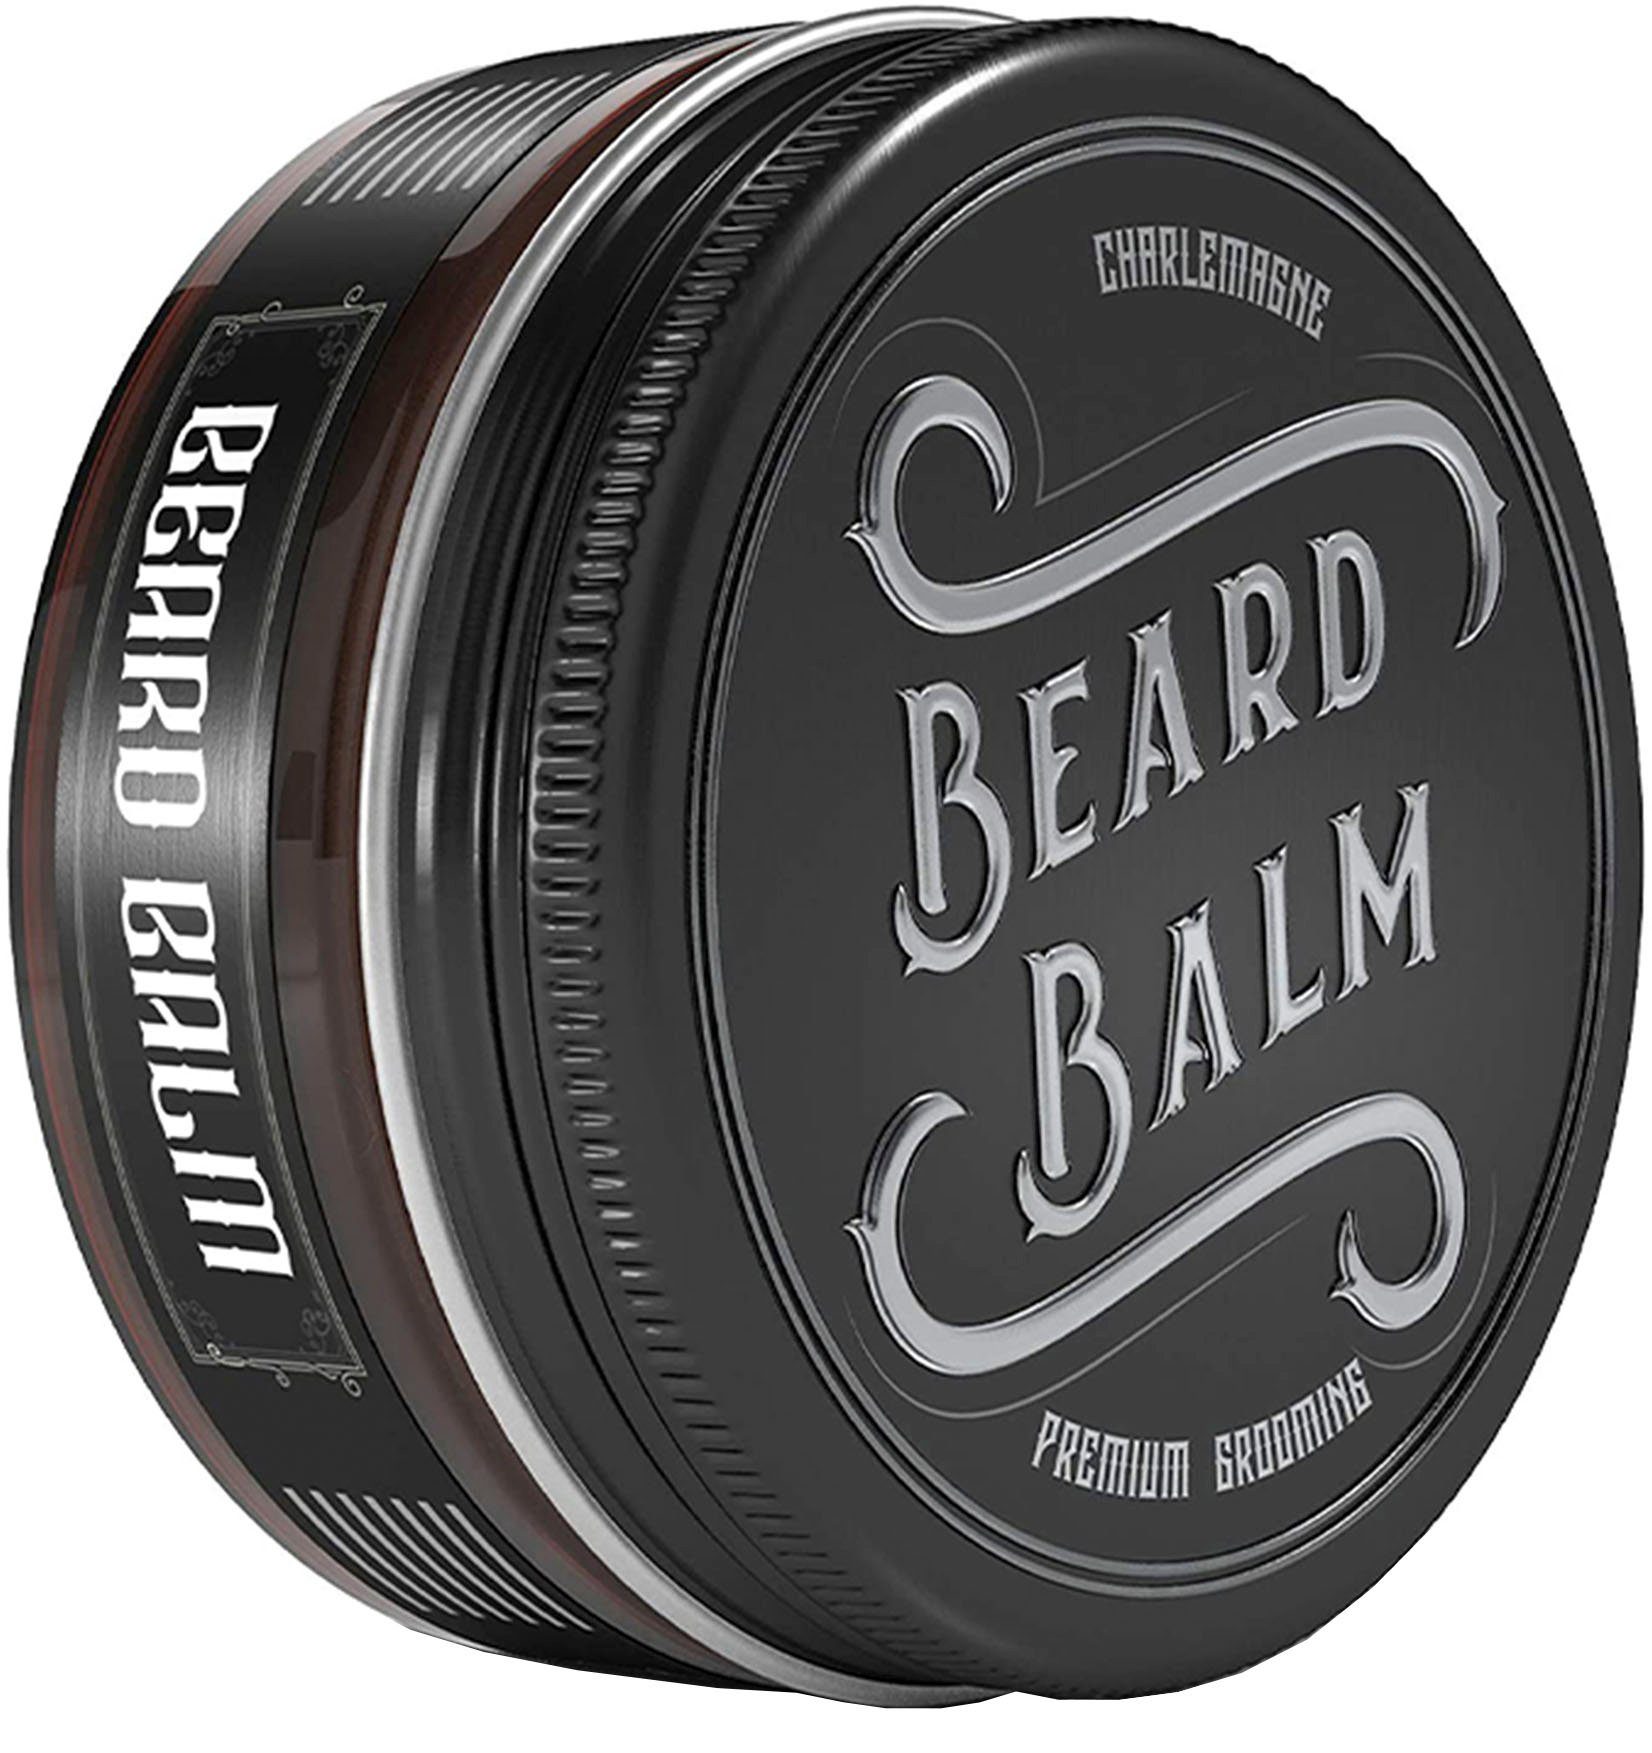 CHARLEMAGNE Balm Beard Bartbalsam